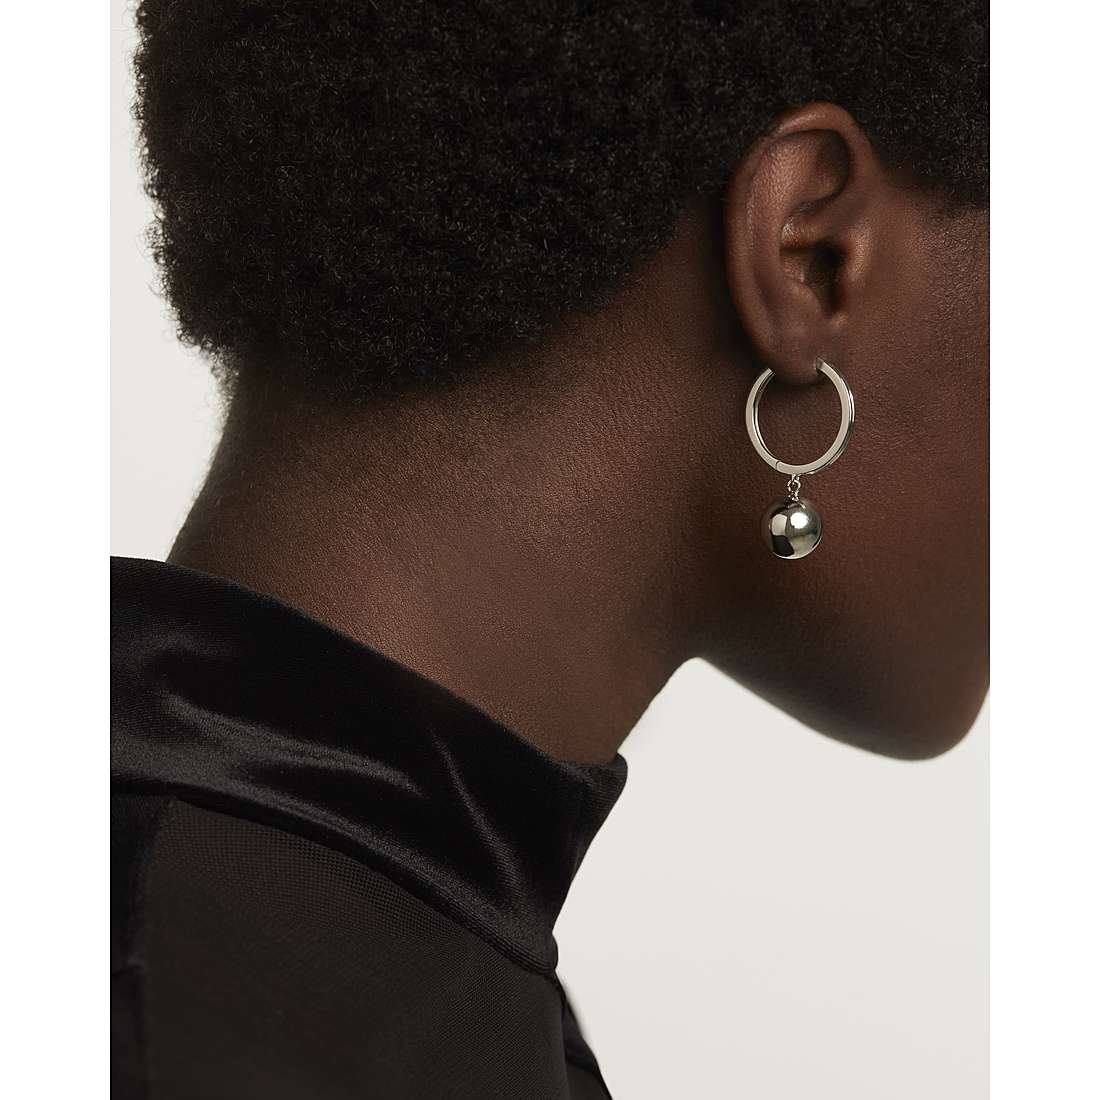 PDPaola earrings Super Future woman AR02-507-U wearing